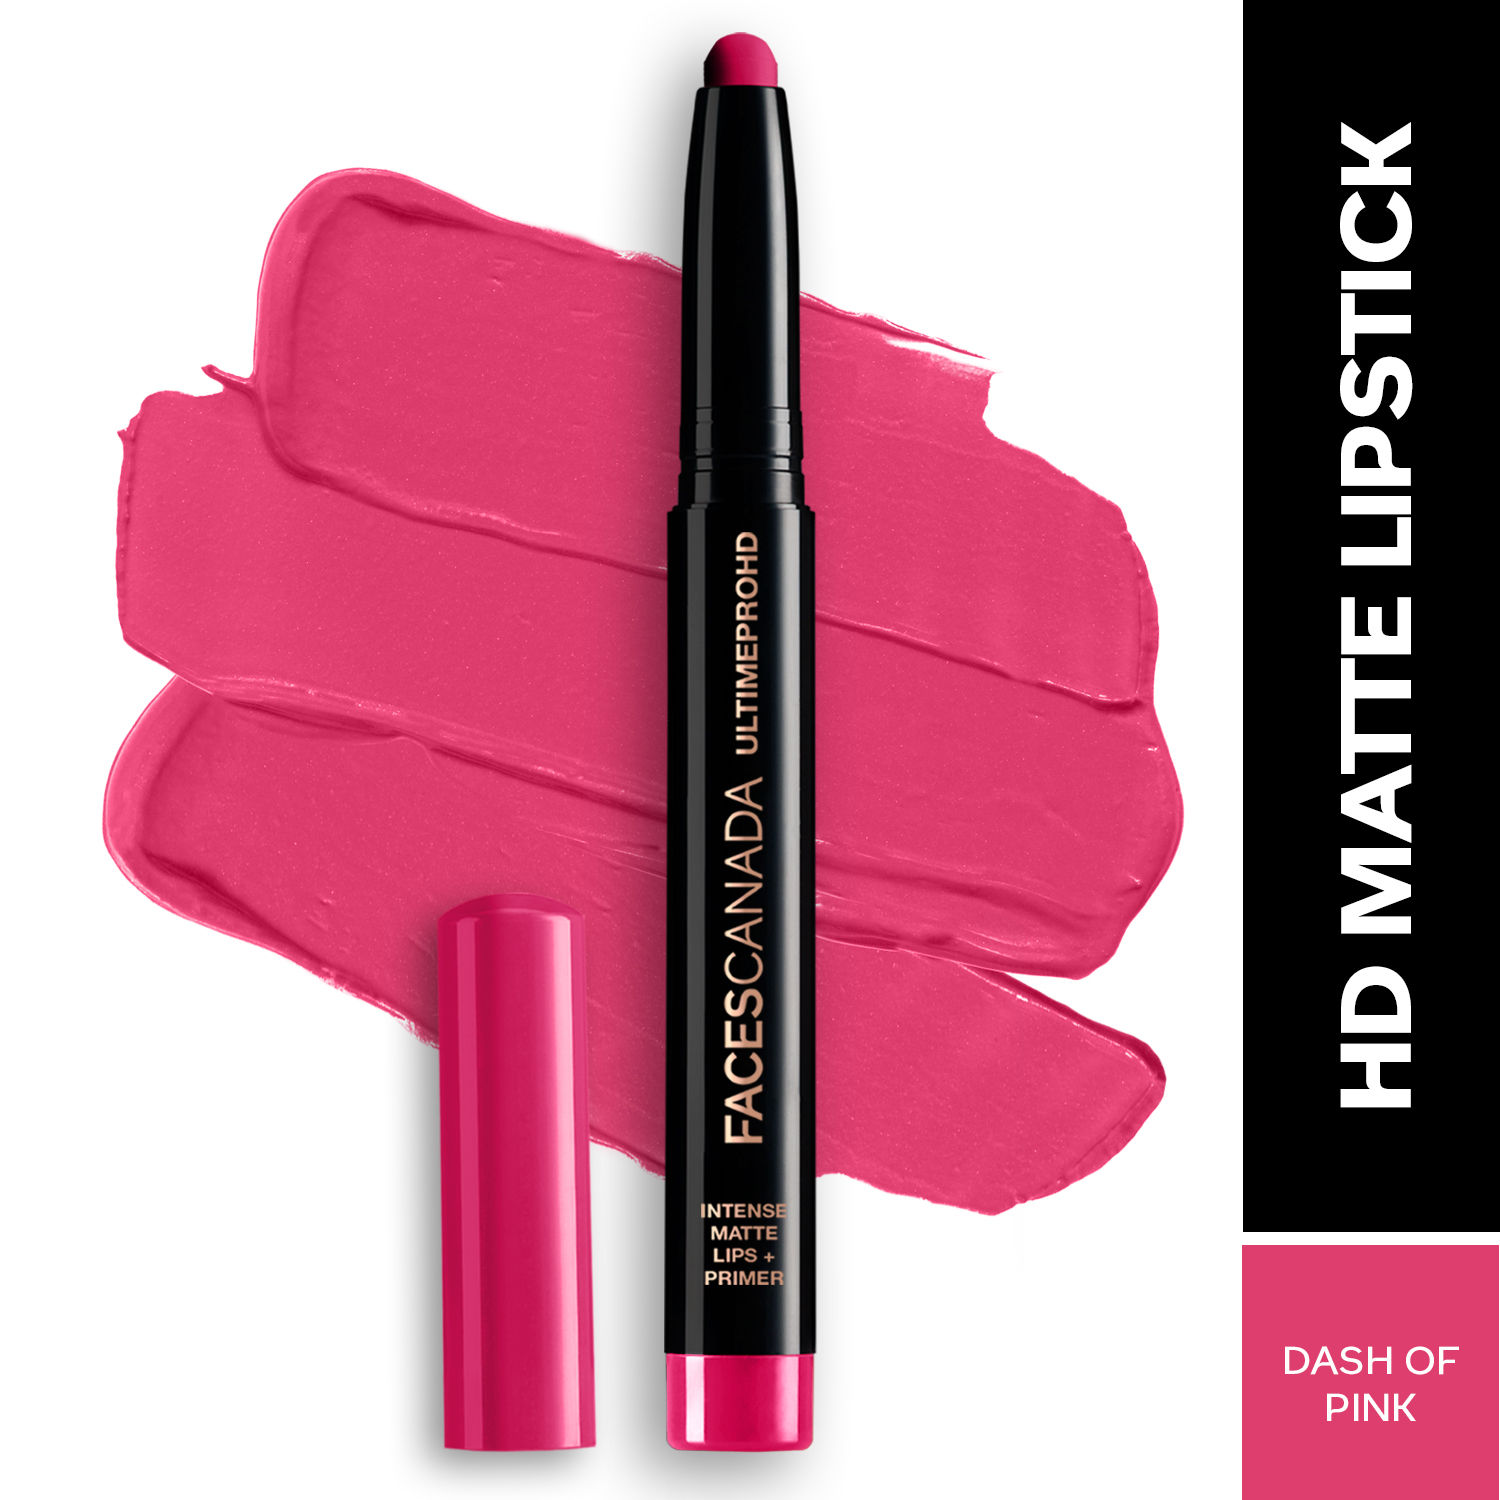 Hot Pink HD Lip Paint-bright Pink O.C.D. -  Canada